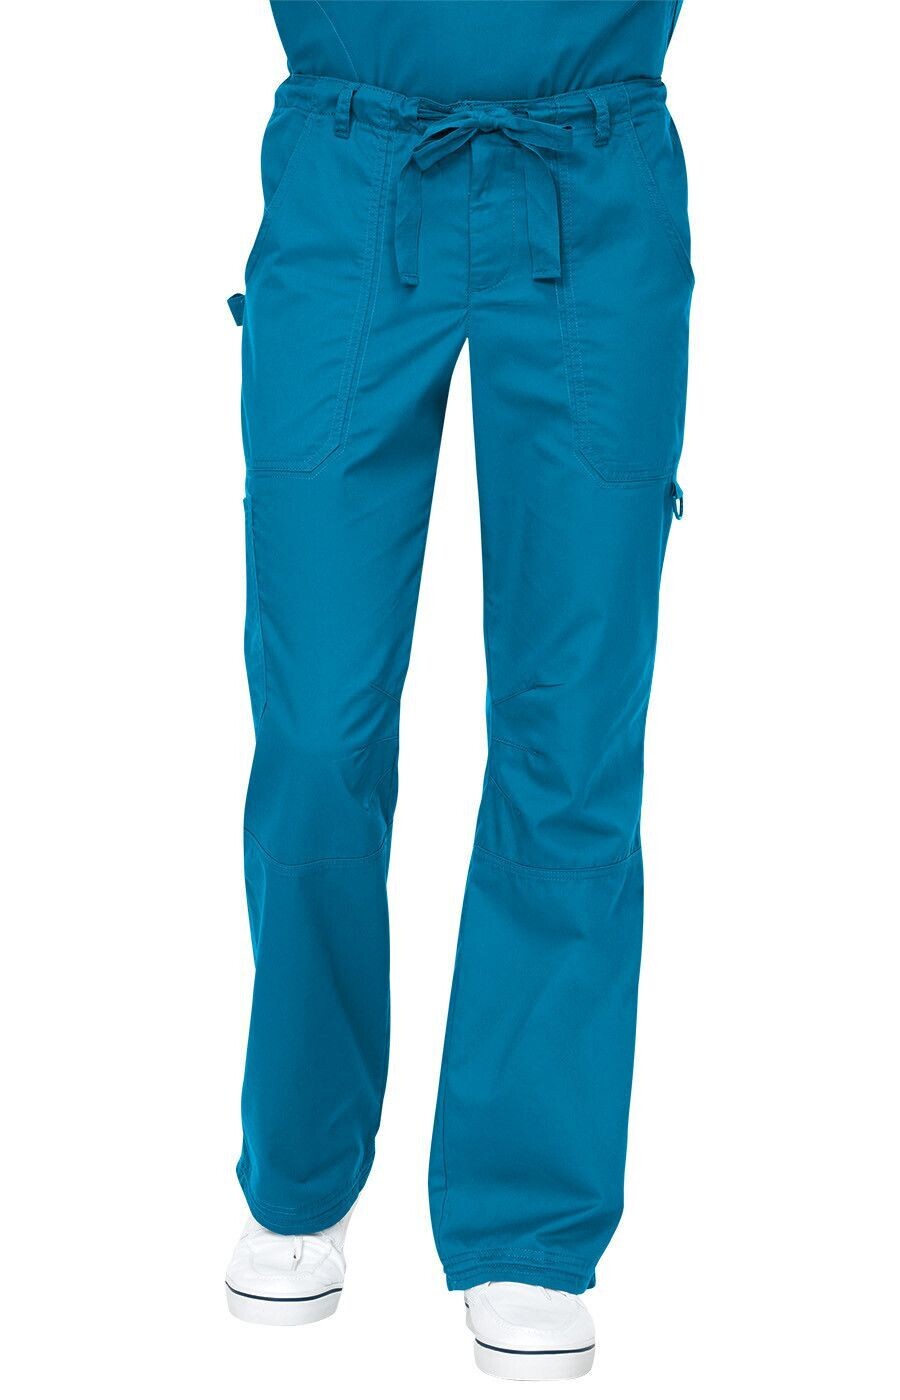 Pantalone KOI CLASSICS JAMES Uomo Colore 78. Ultramarine